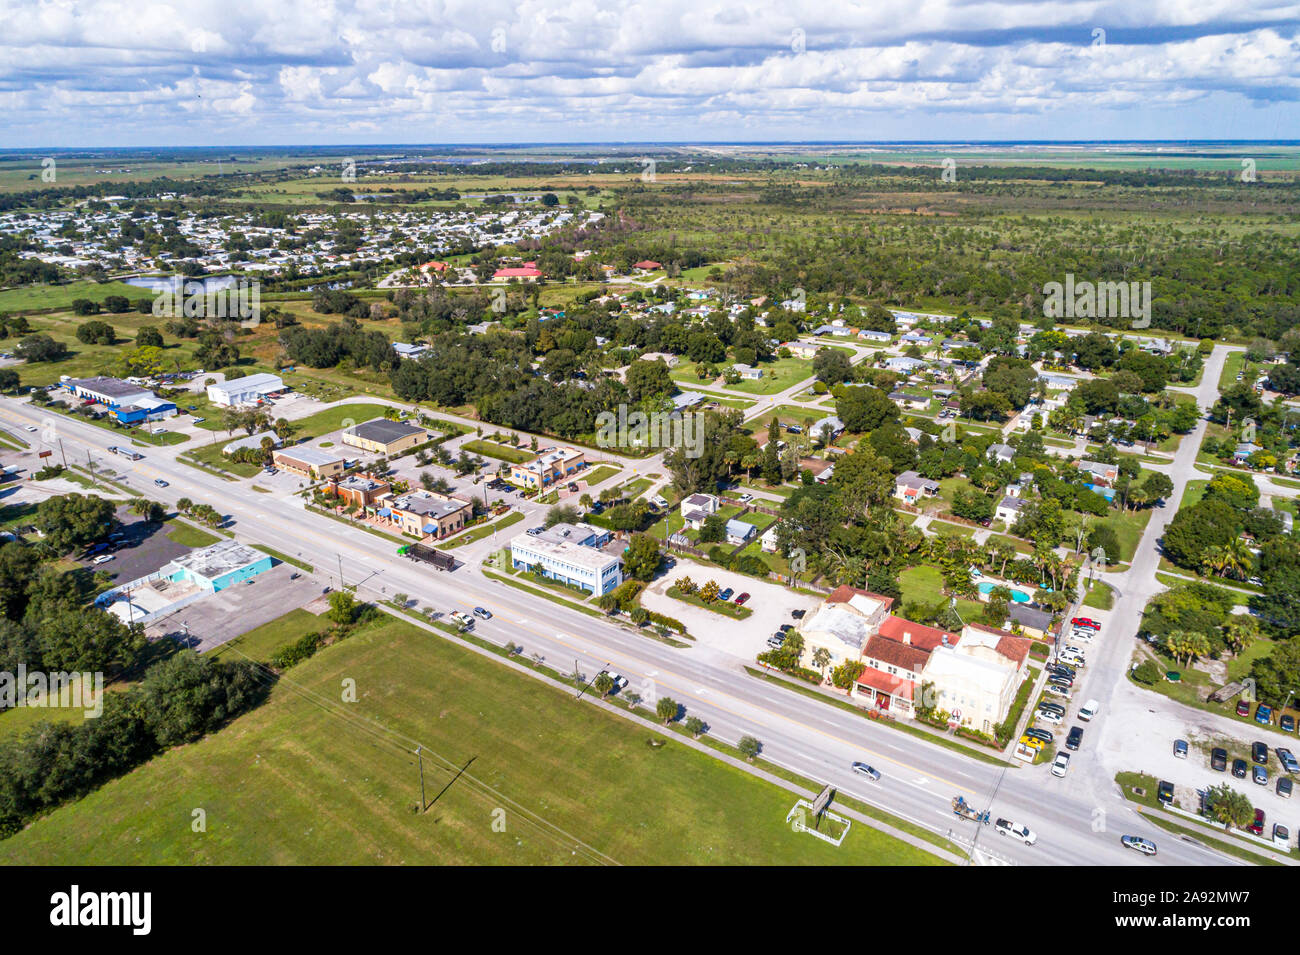 Indiantown Florida,route 710 Warfield Boulevard,Seminole Inn,hotel hotels lodging inn motel motels,aerial overhead bird's eye view above,photo making Stock Photo